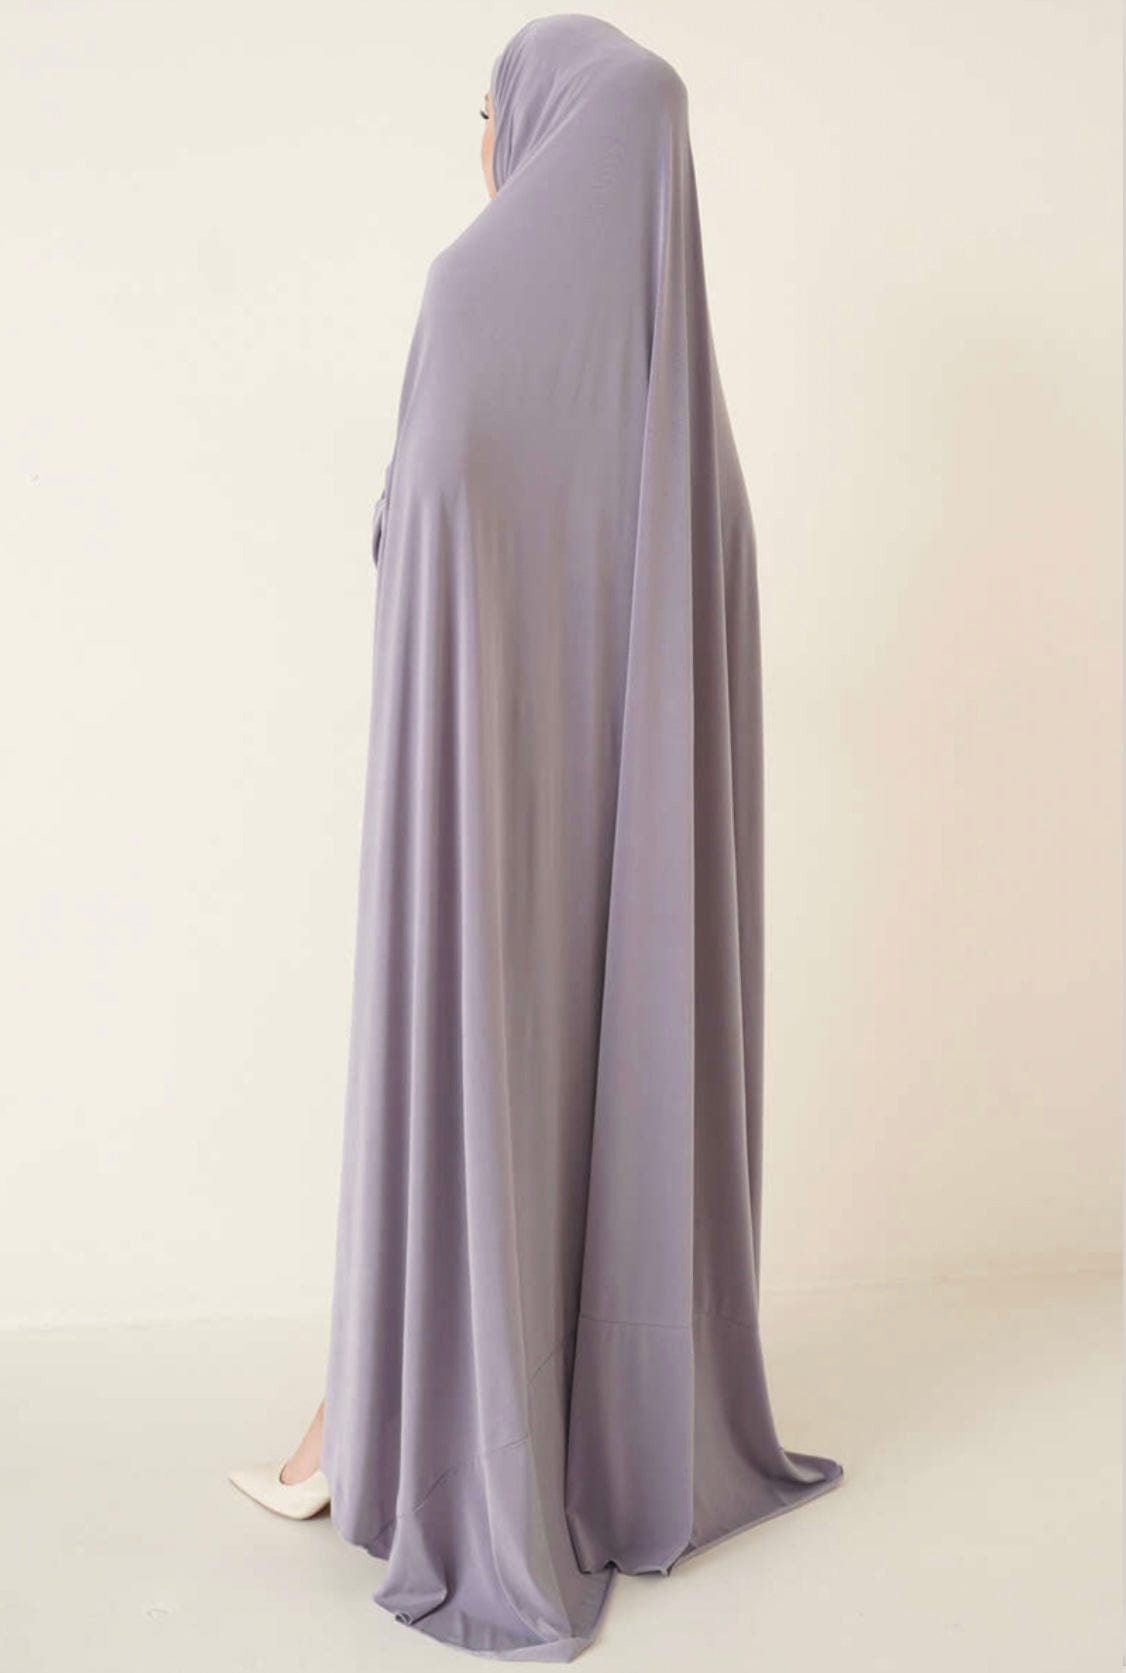 Deen Souvenir Abaya Premium Jersey in Grau Abaya Premium Jersey in Grau - Modebewusstsein auf höchstem Niveau